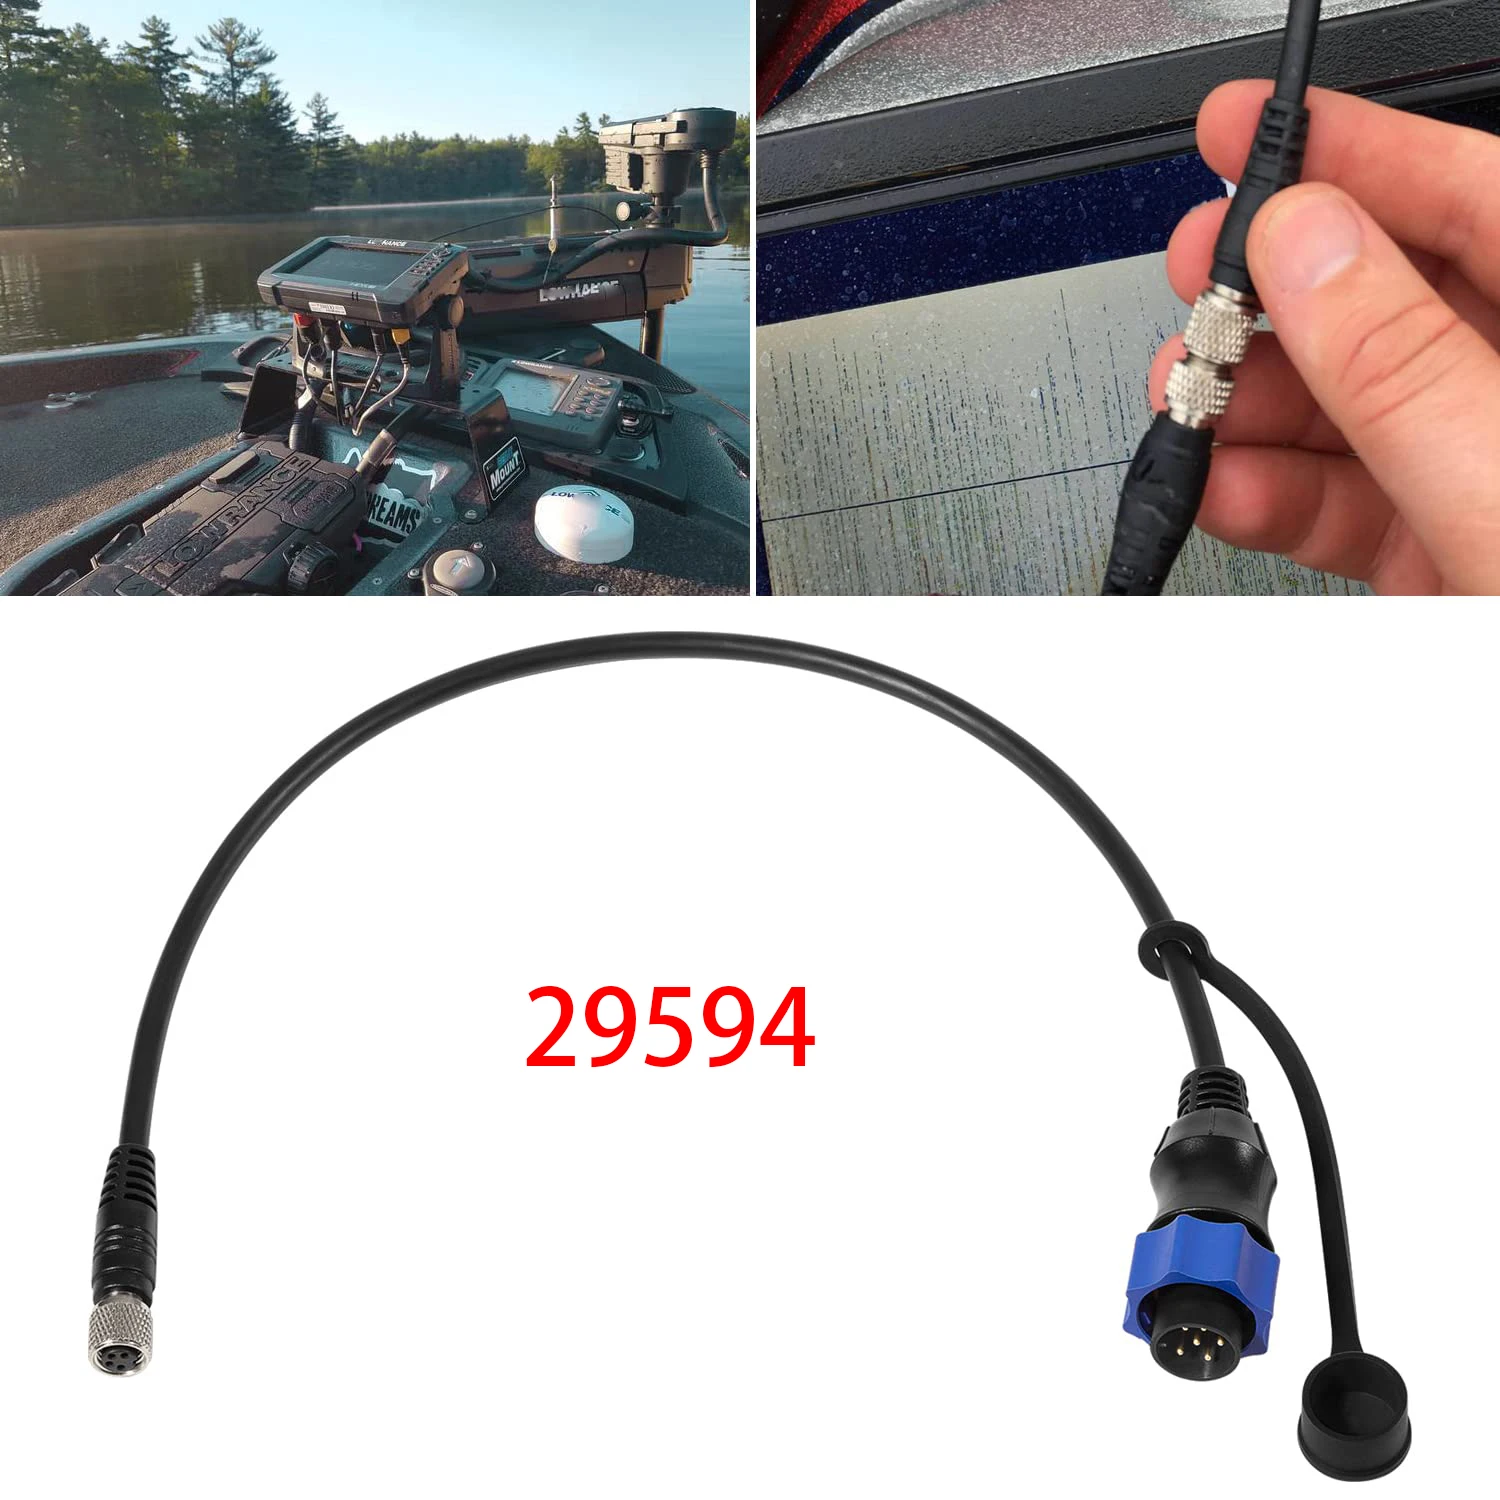 

MKR-US2-10 Universal Sonar 2 Adaptor Cable Fit for Lowrance Fish Finder Works on US2 Sonar Transducer , Minn Kota Trolling Motor